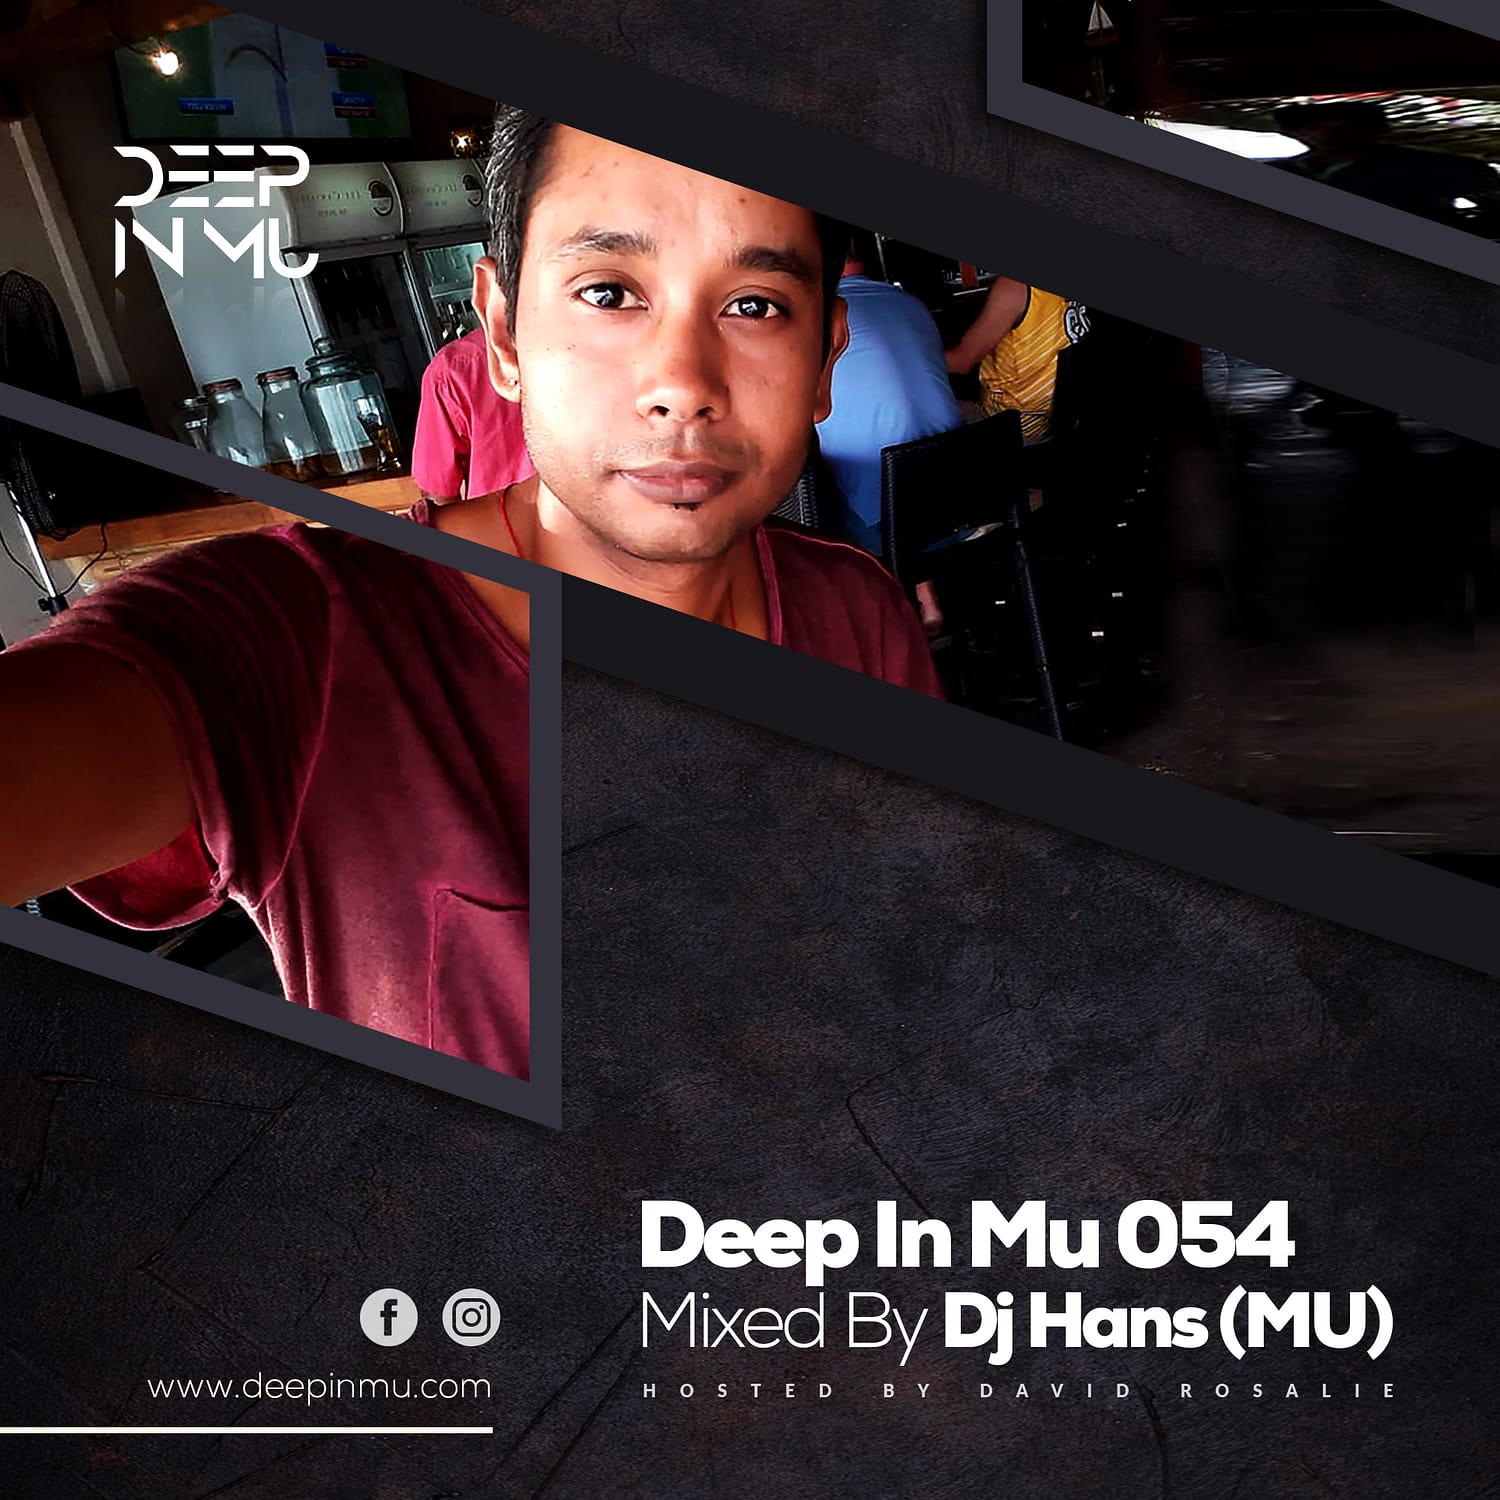 Deep in Mu 054 Mixed by Dj Hans (MU)